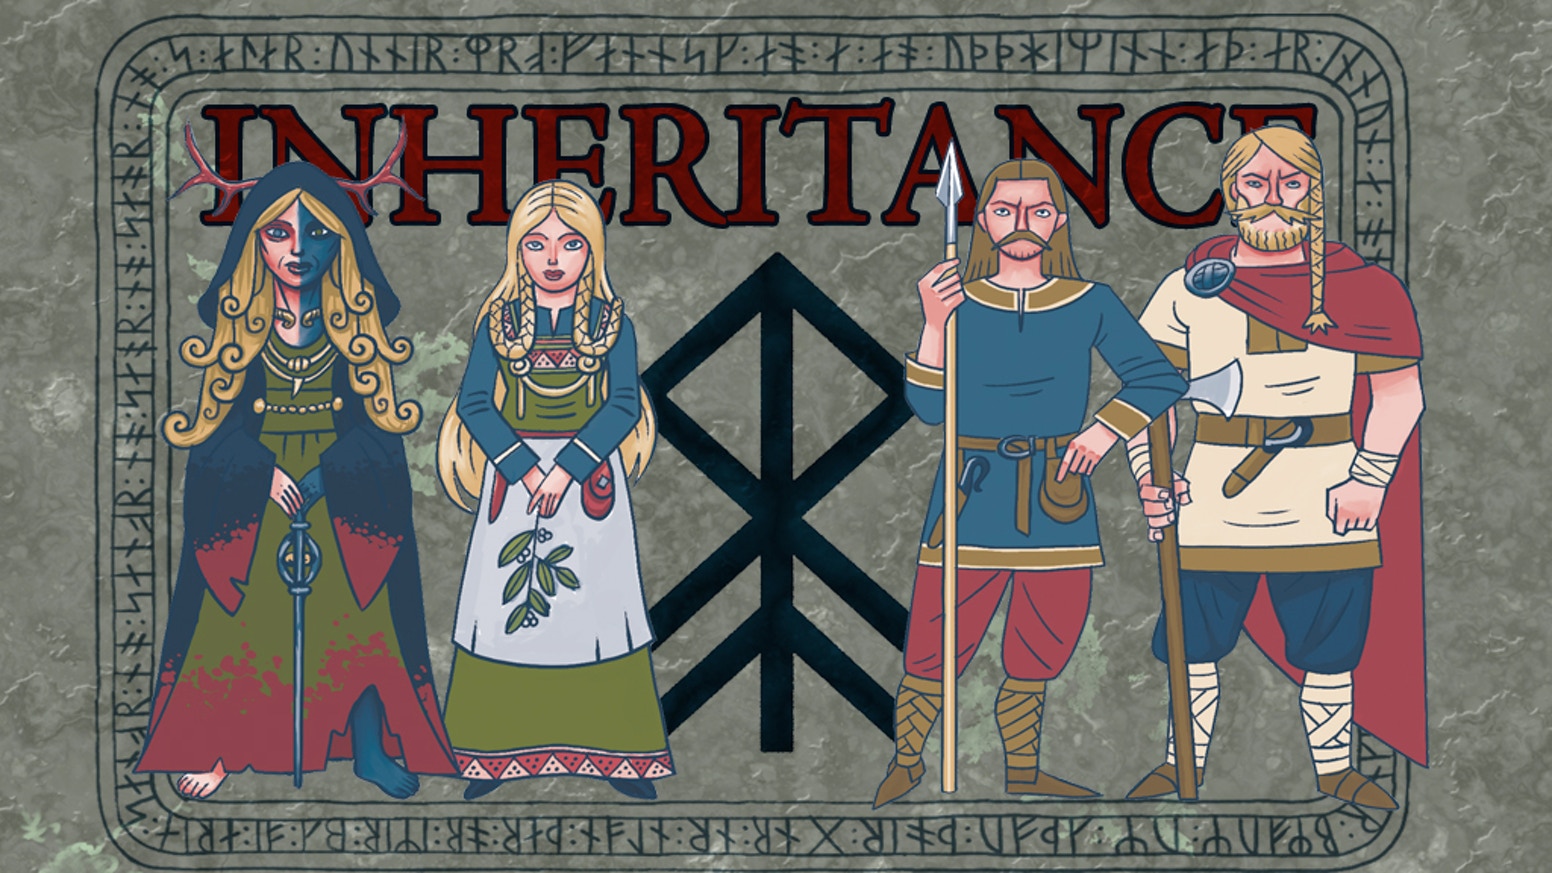 A Viking Family Reunion: The Inheritance